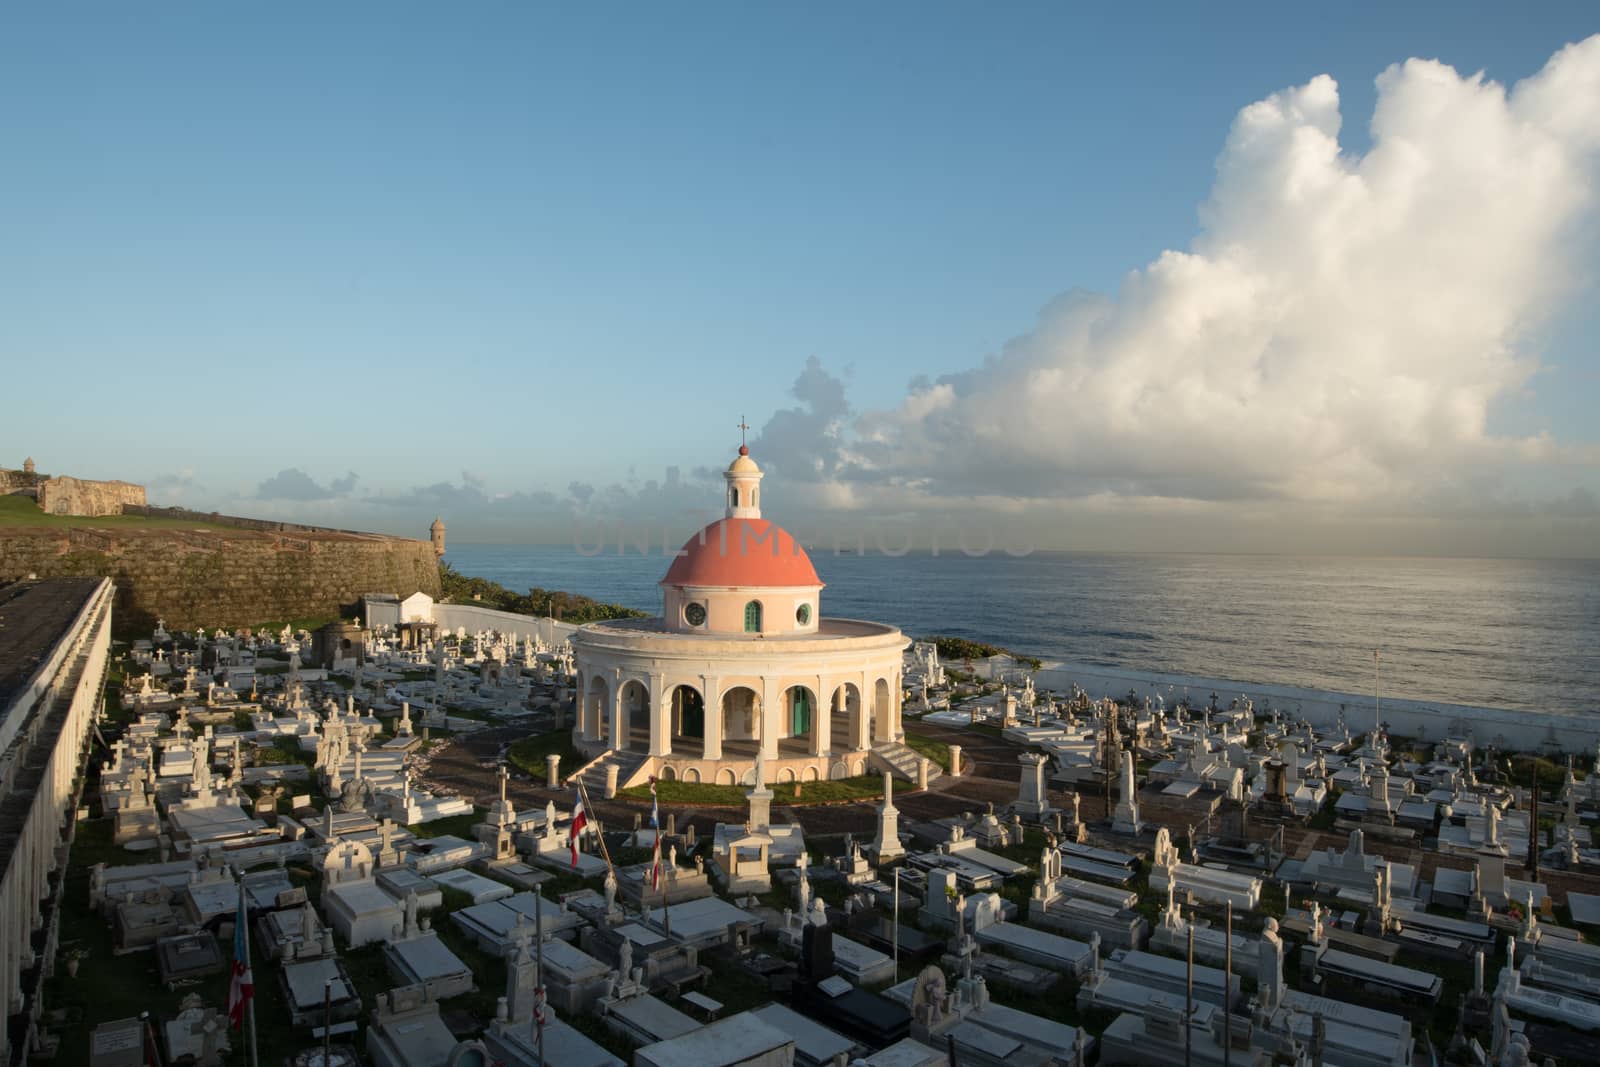 Sunrise view of San Juan Cemetery